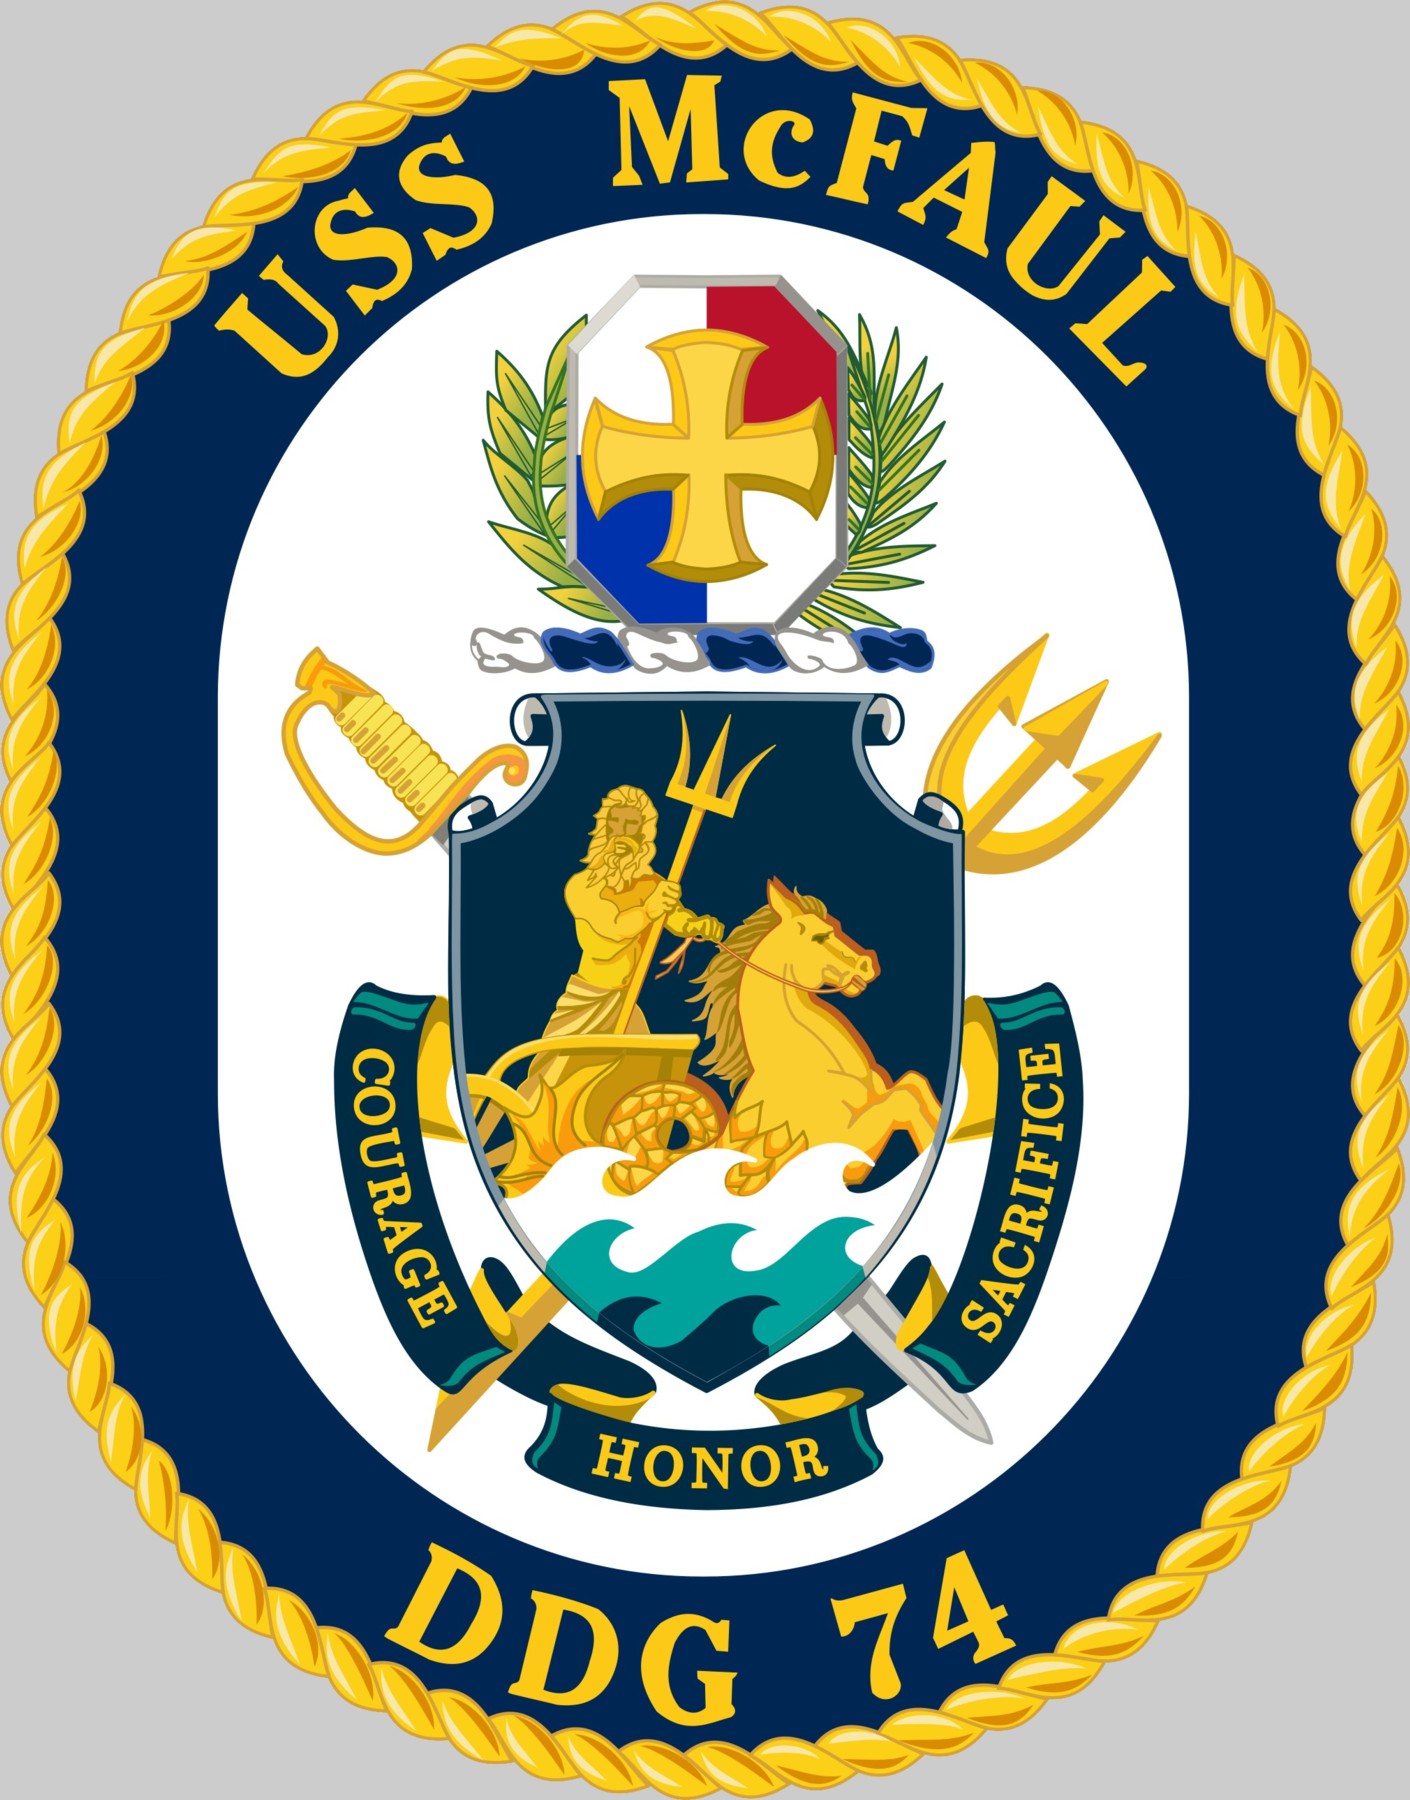 ddg-74 uss mcfaul insignia crest patch badge destroyer us navy 02c